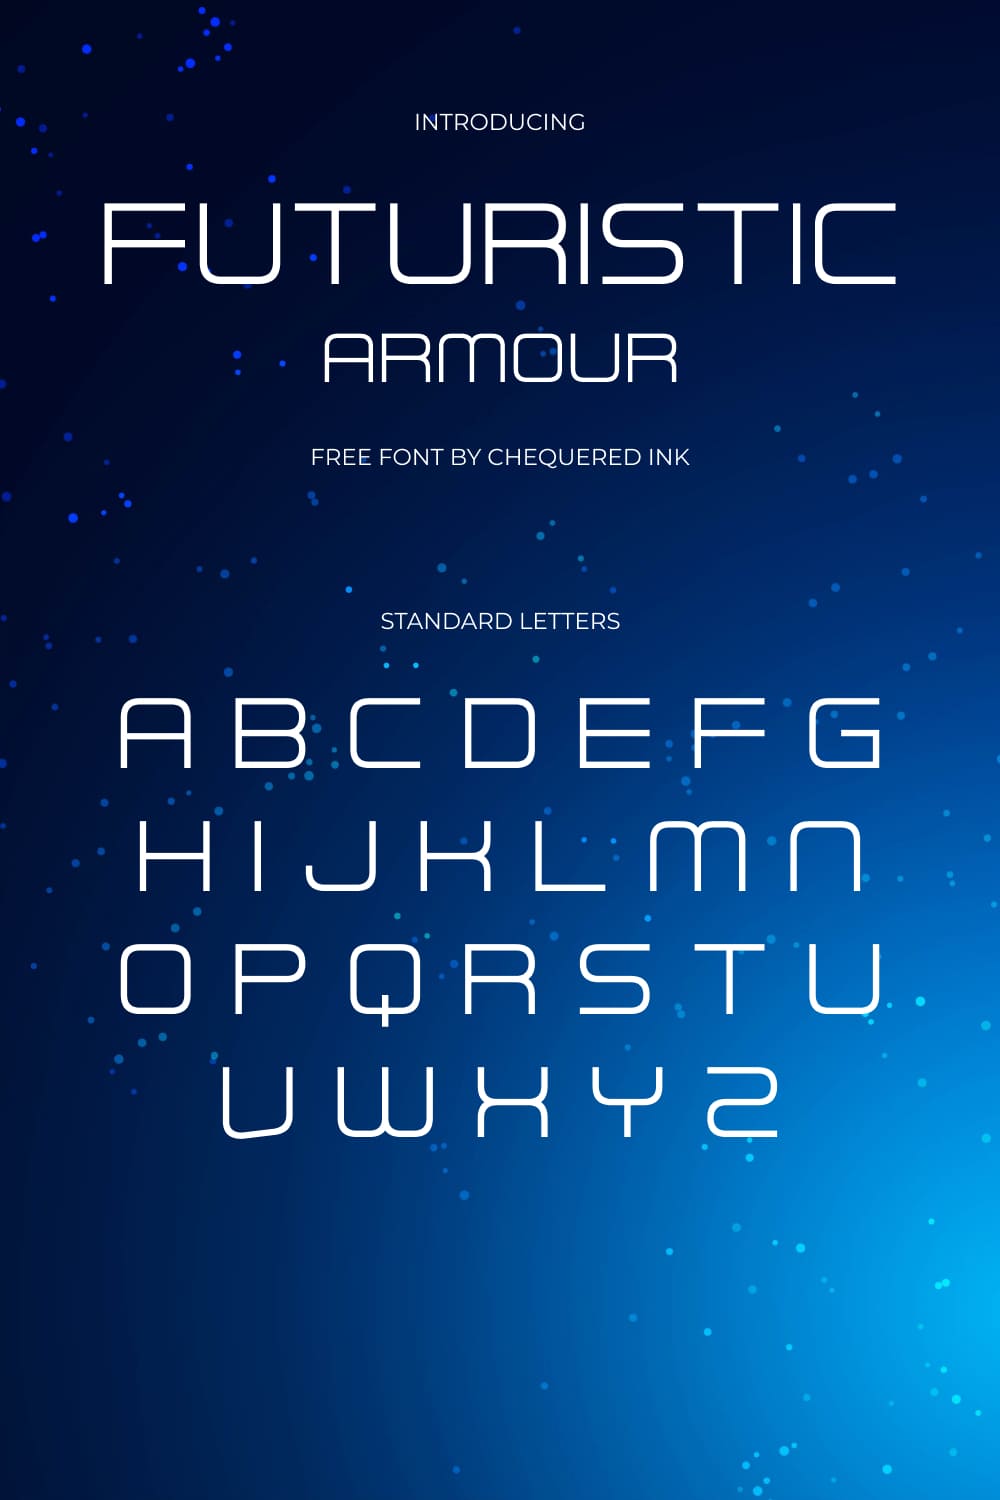 Free Font Futuristic Armour Alphabet Pinterest Collage Image.